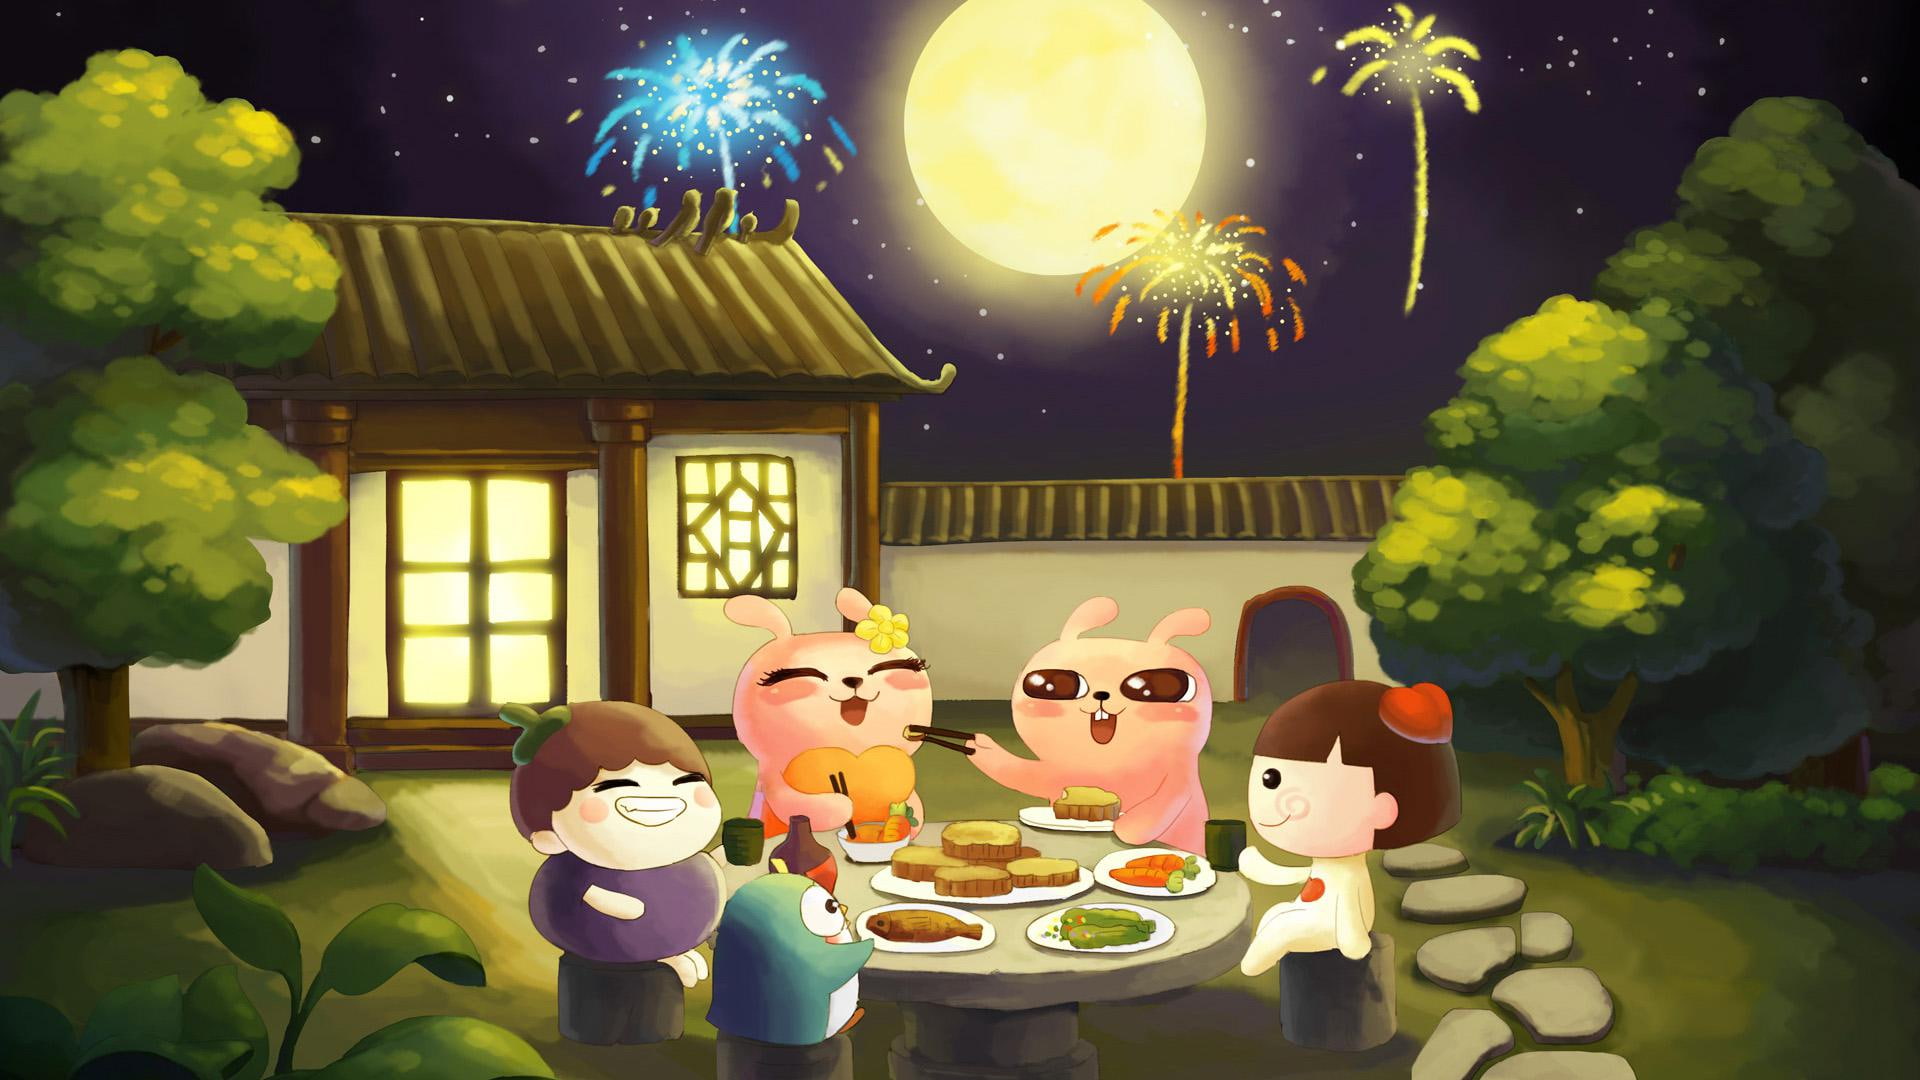 Cold rabbit, Mid-Autumn Festival, moon, moon cake, reunion, fireworks, happy